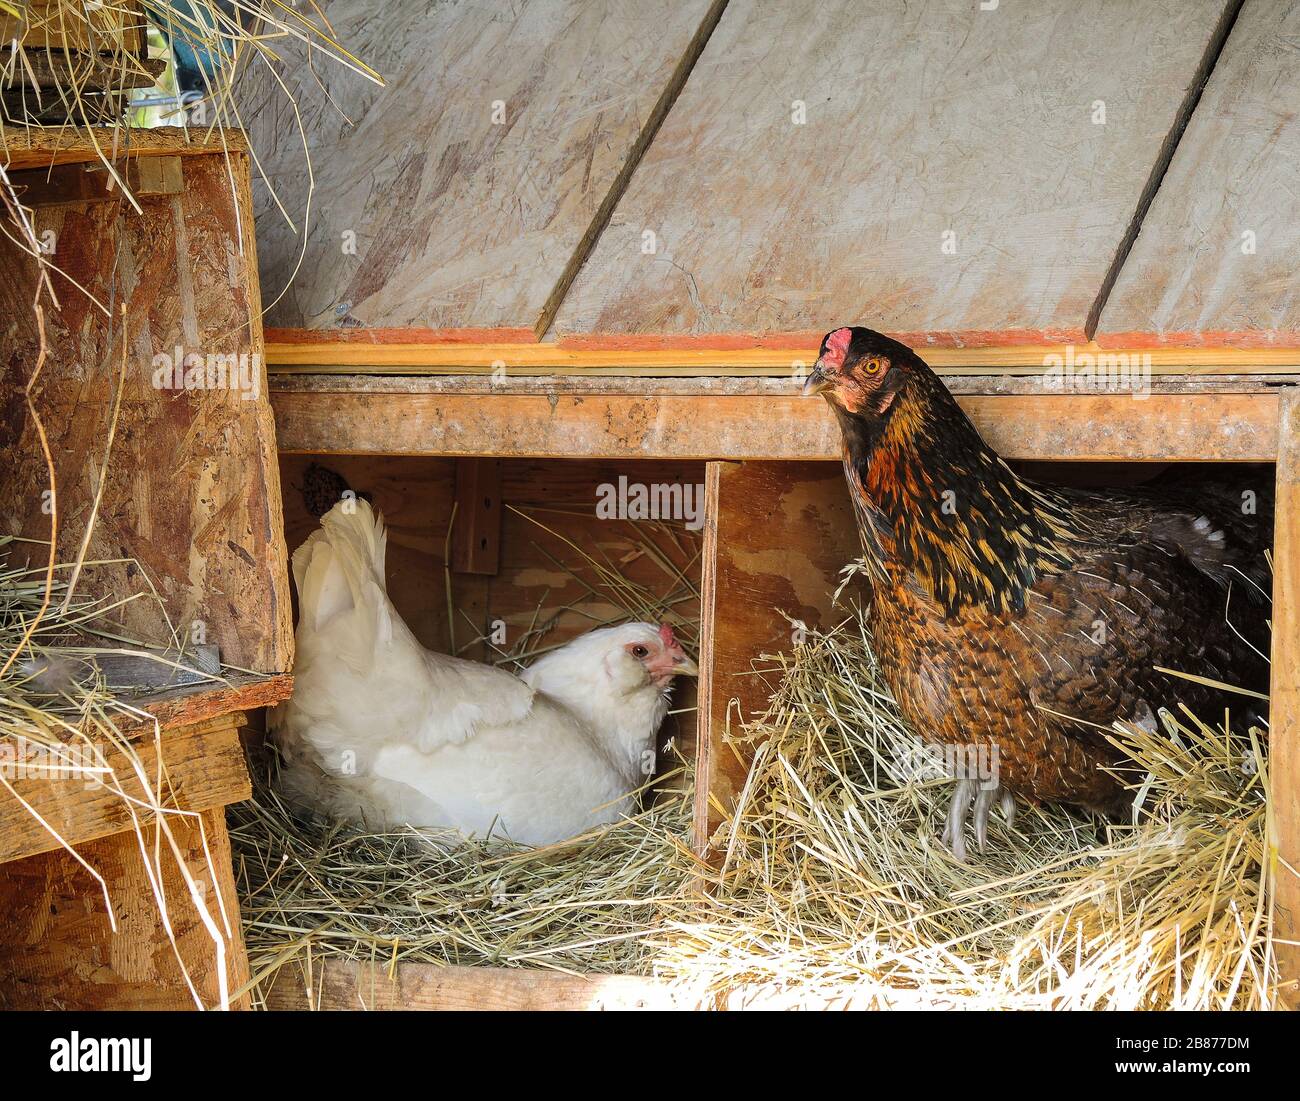 American Family farm, Hen house Stock Photo